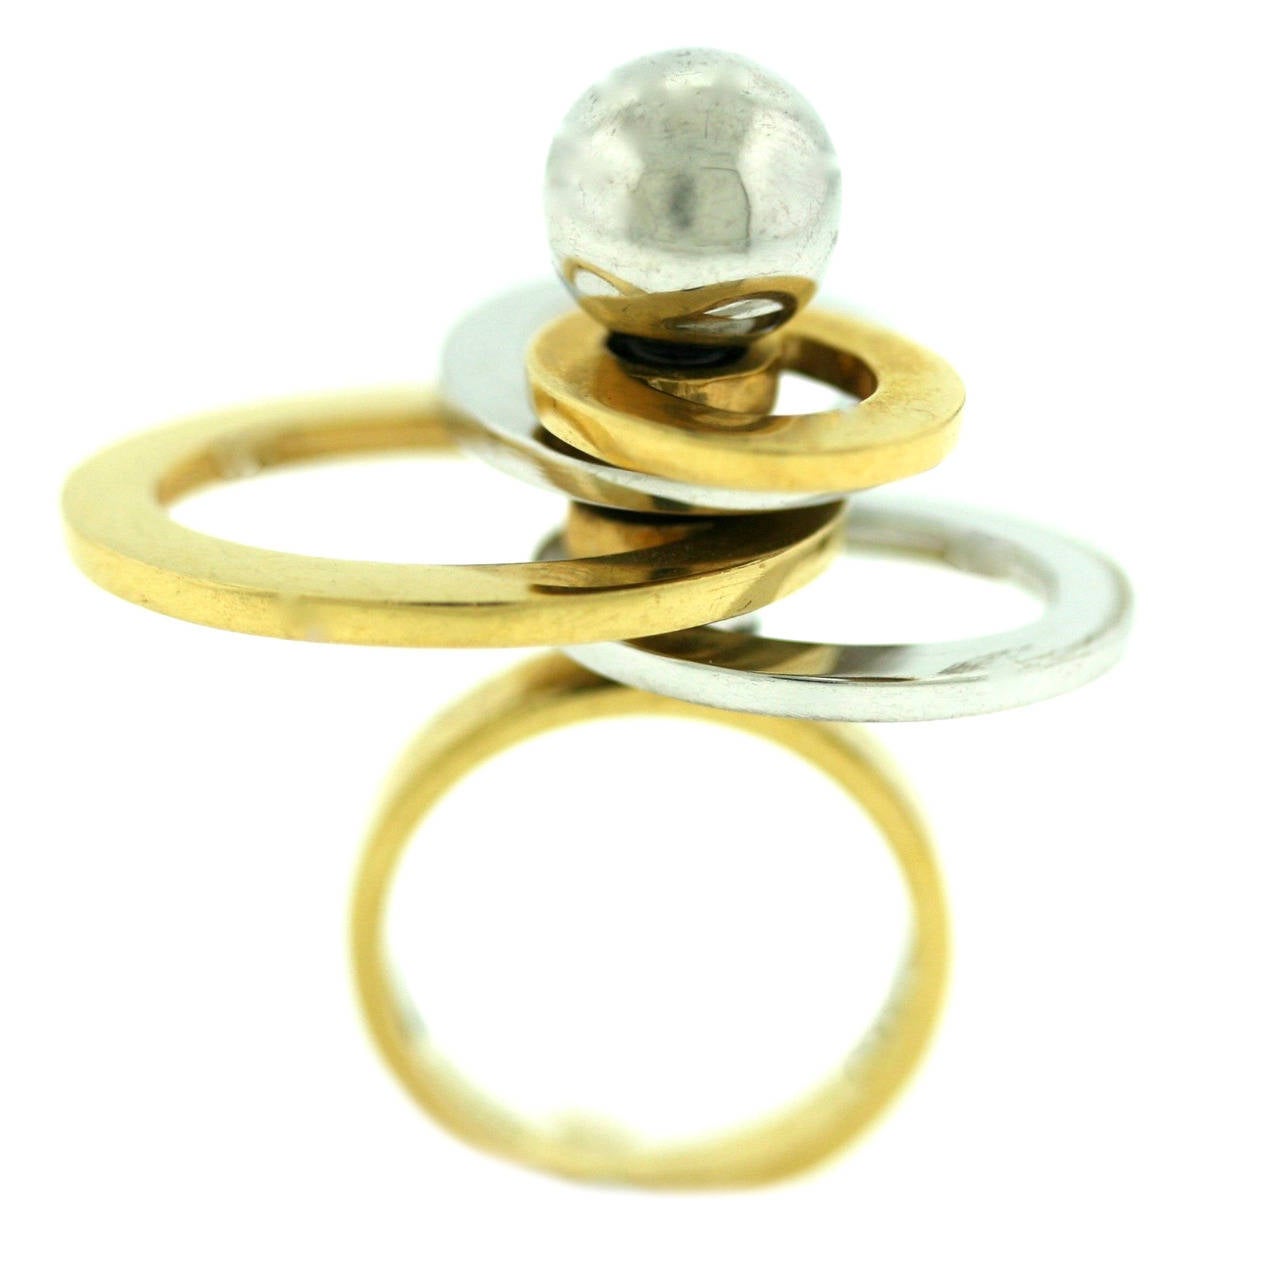 Elizabeth Taylor's Cartier Gold Spinning Ring